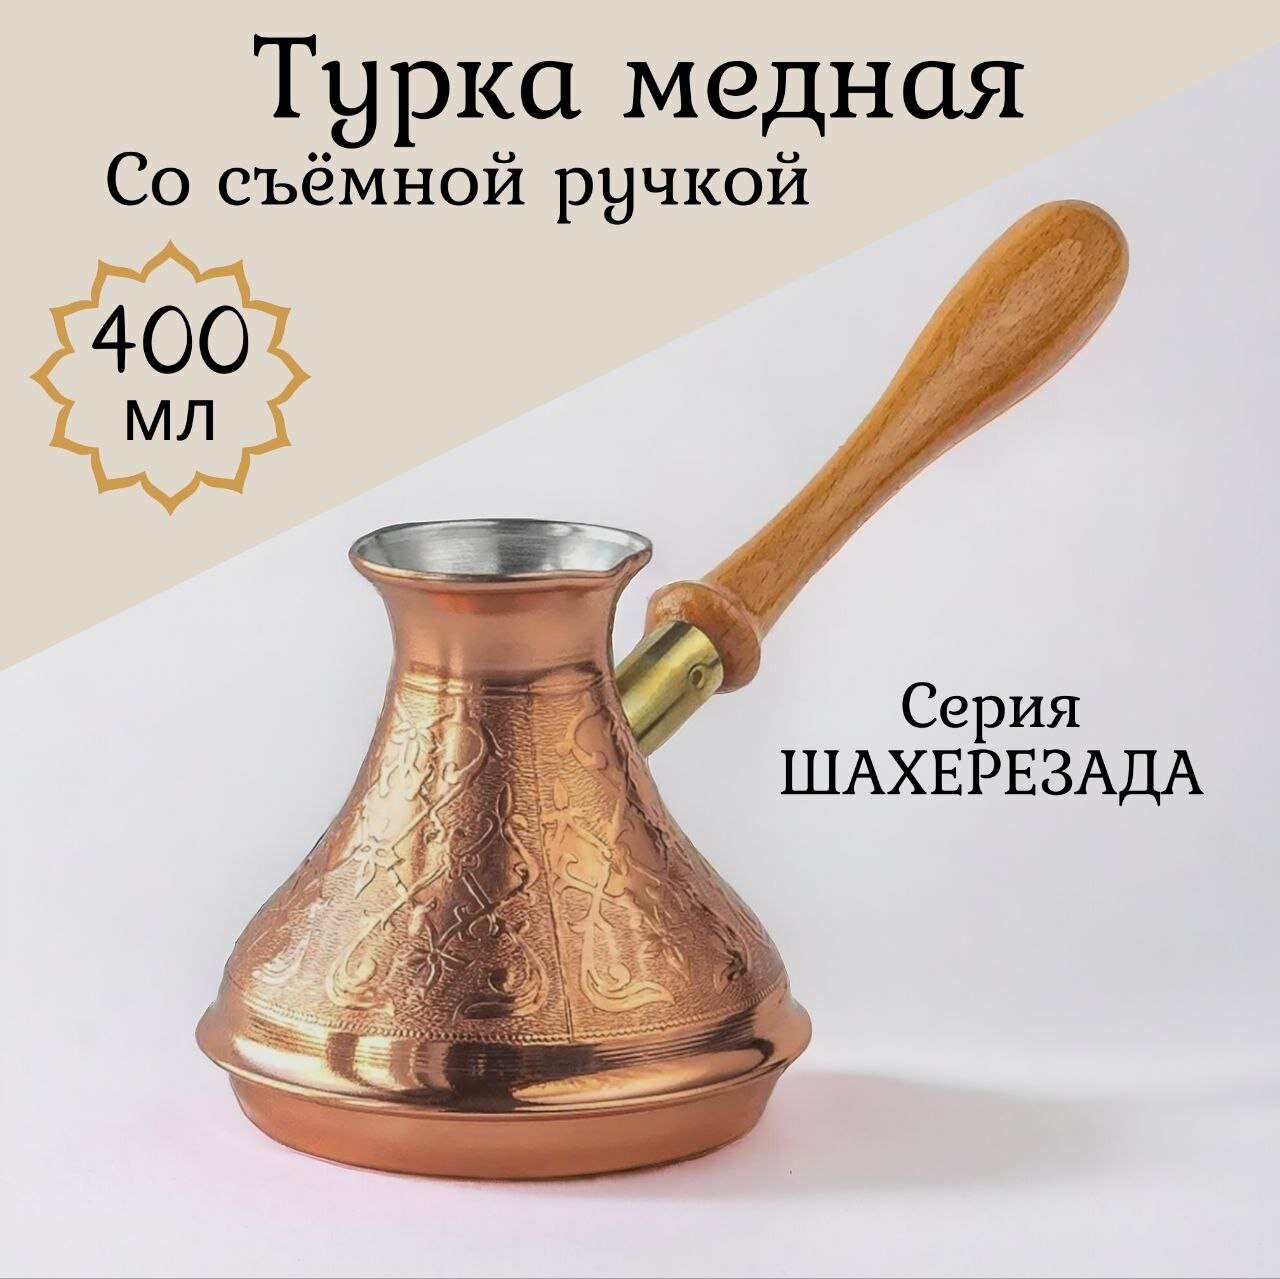 Кофеварка (турка) Tima "Шахерезада" сьемная ручка 400 мл.